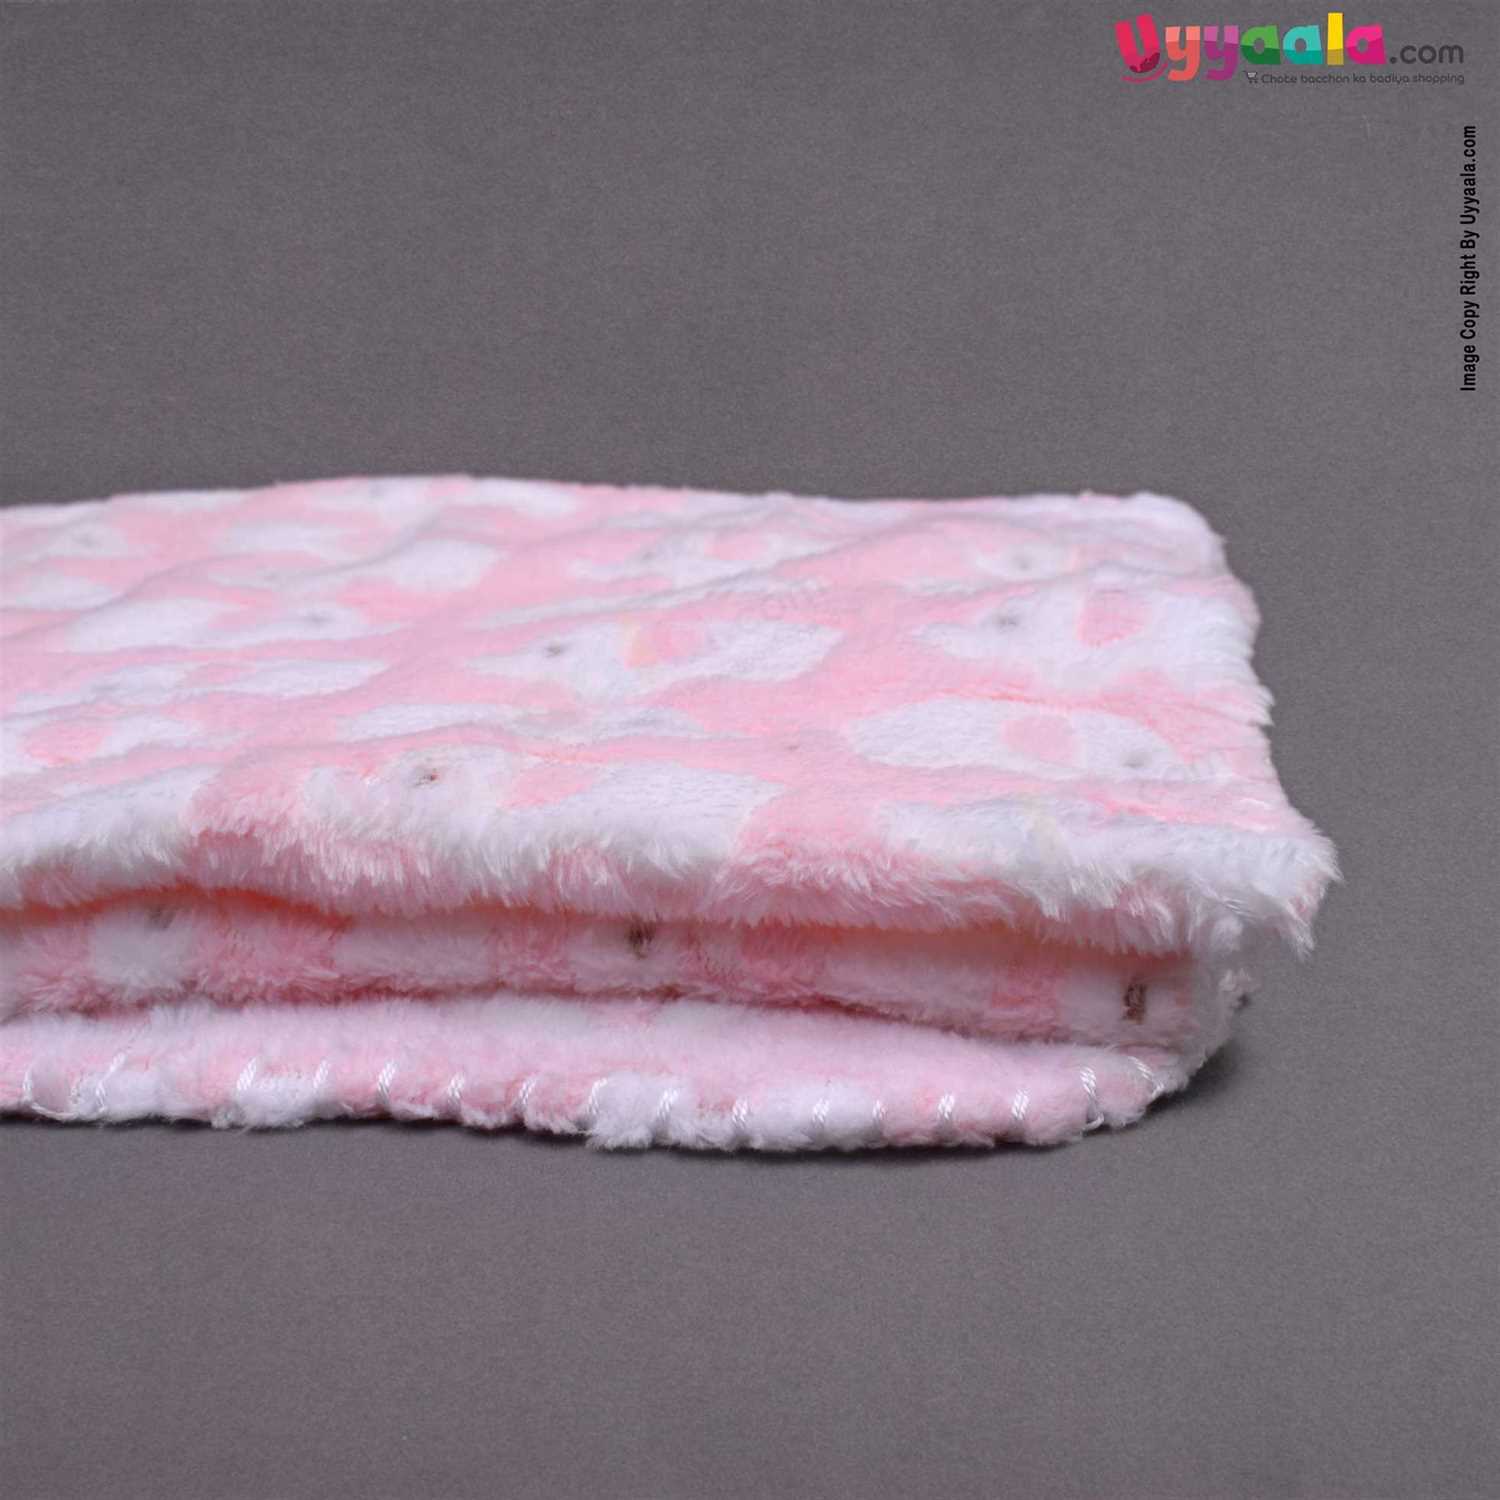 Valiantier Fur Roll Blanket Elephant Print 0-24m,Pink